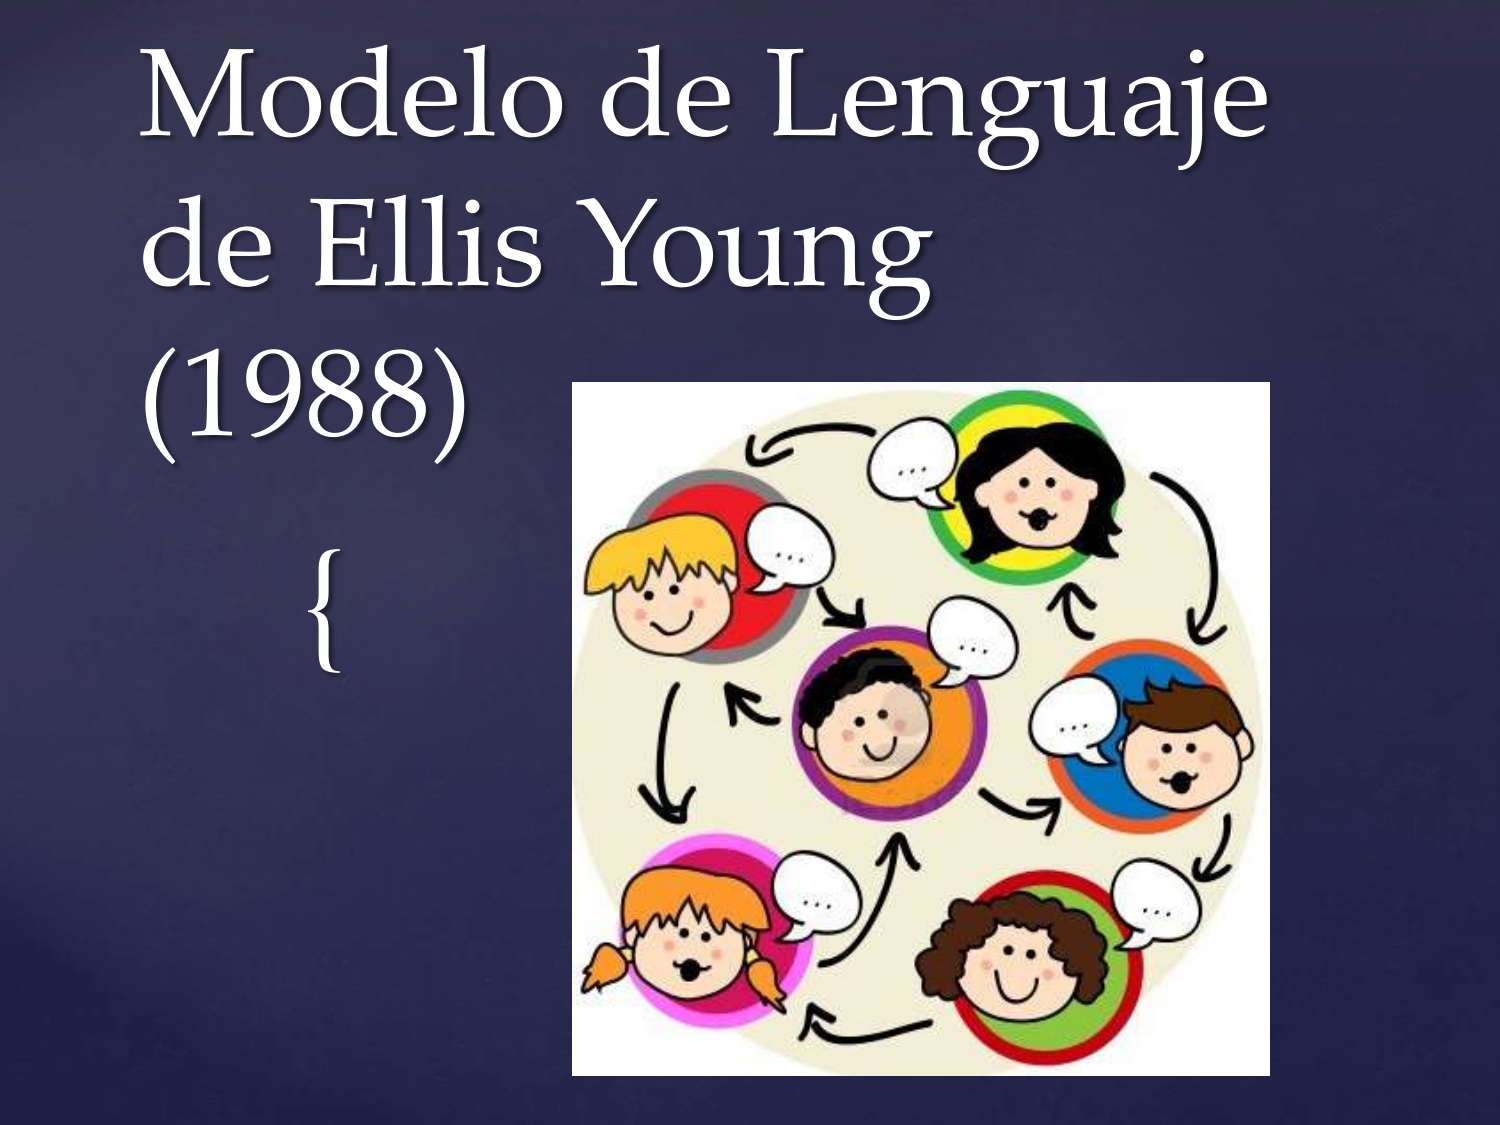 modelo-de-lenguaje-de-ellis-young-19881-150614202250-lva1-app6891